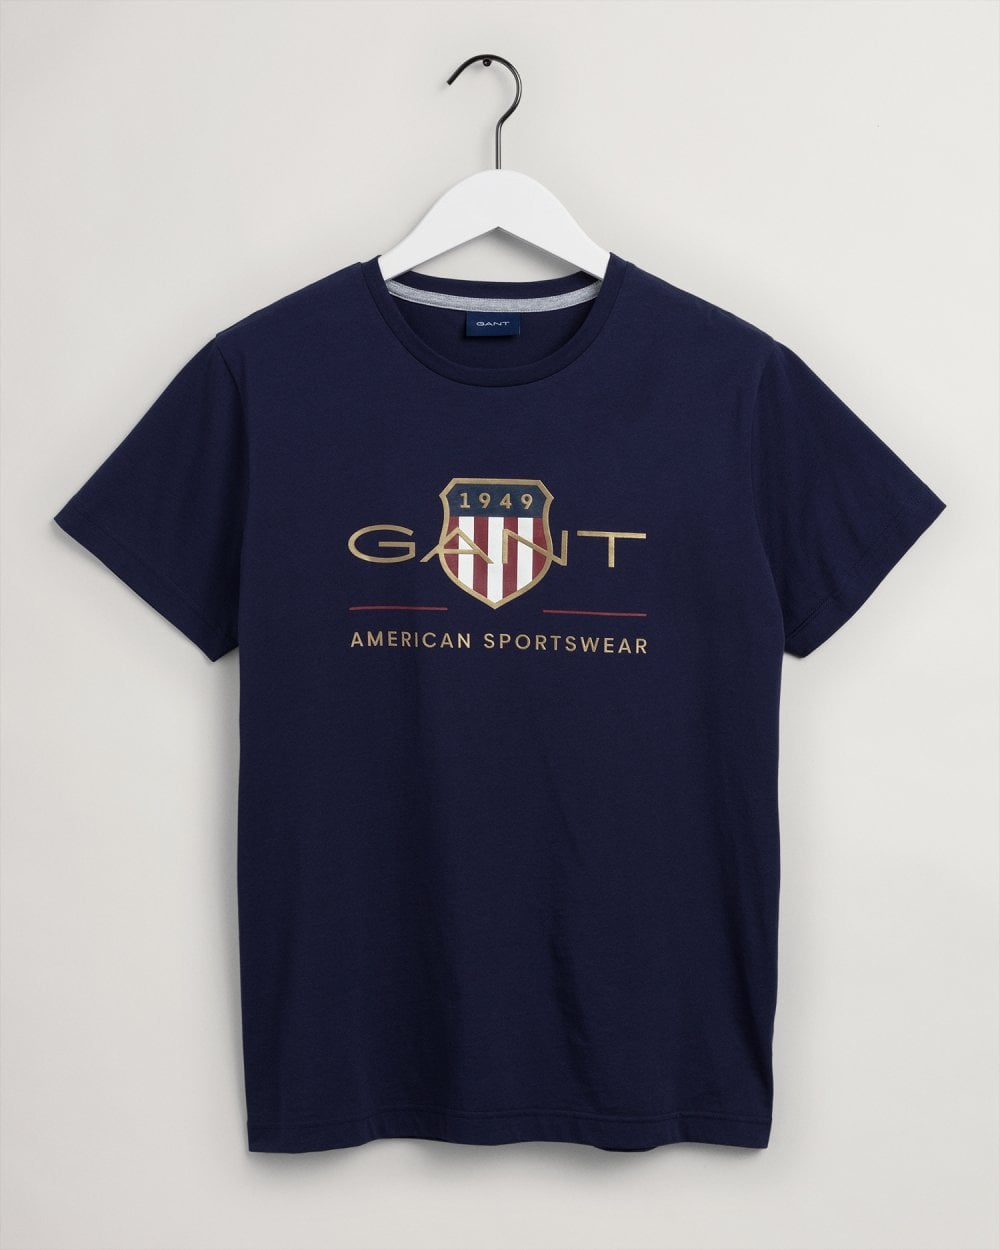 Archive Shield T-Shirt